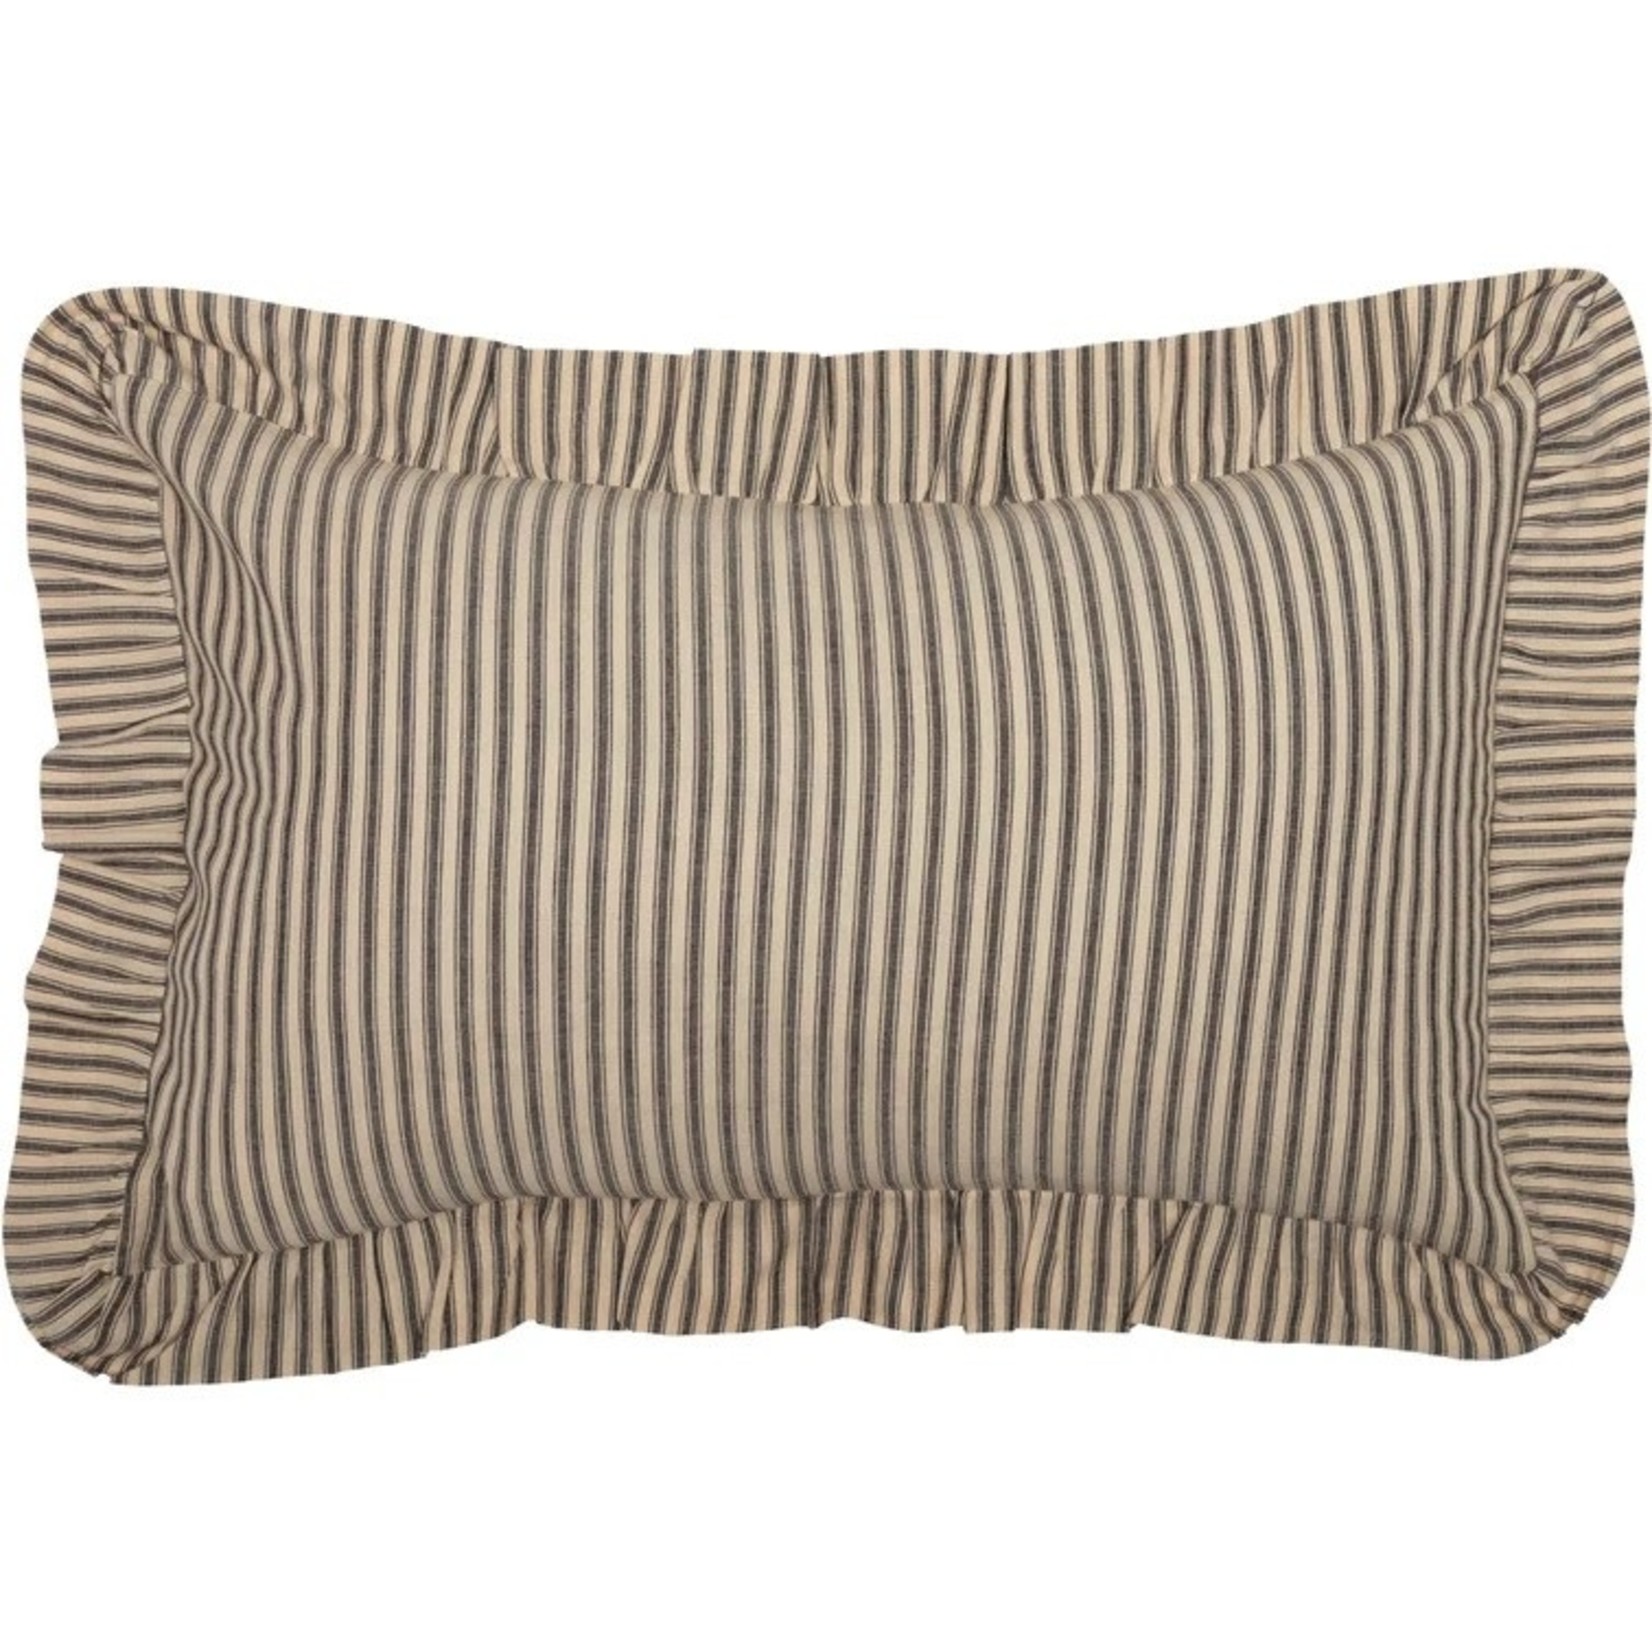 *Surikova Rectangular Cottom Pillow Cover & Insert - Charcoal